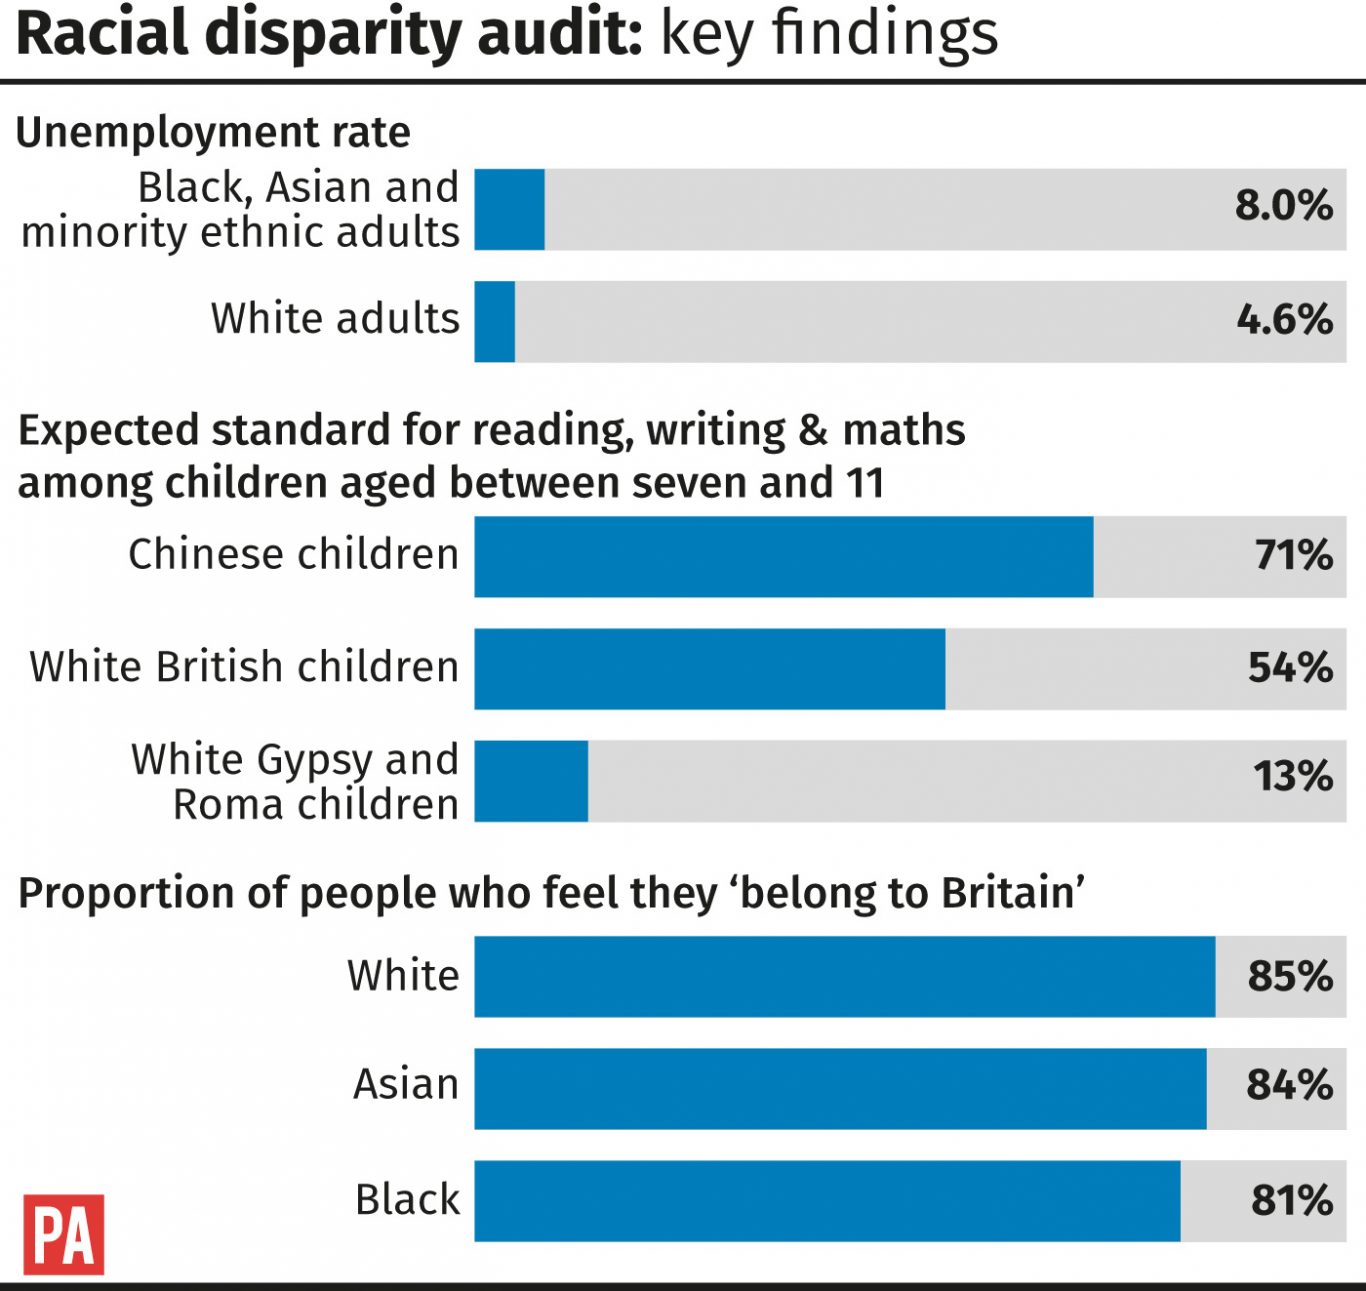 Racial disparity audit: key findings